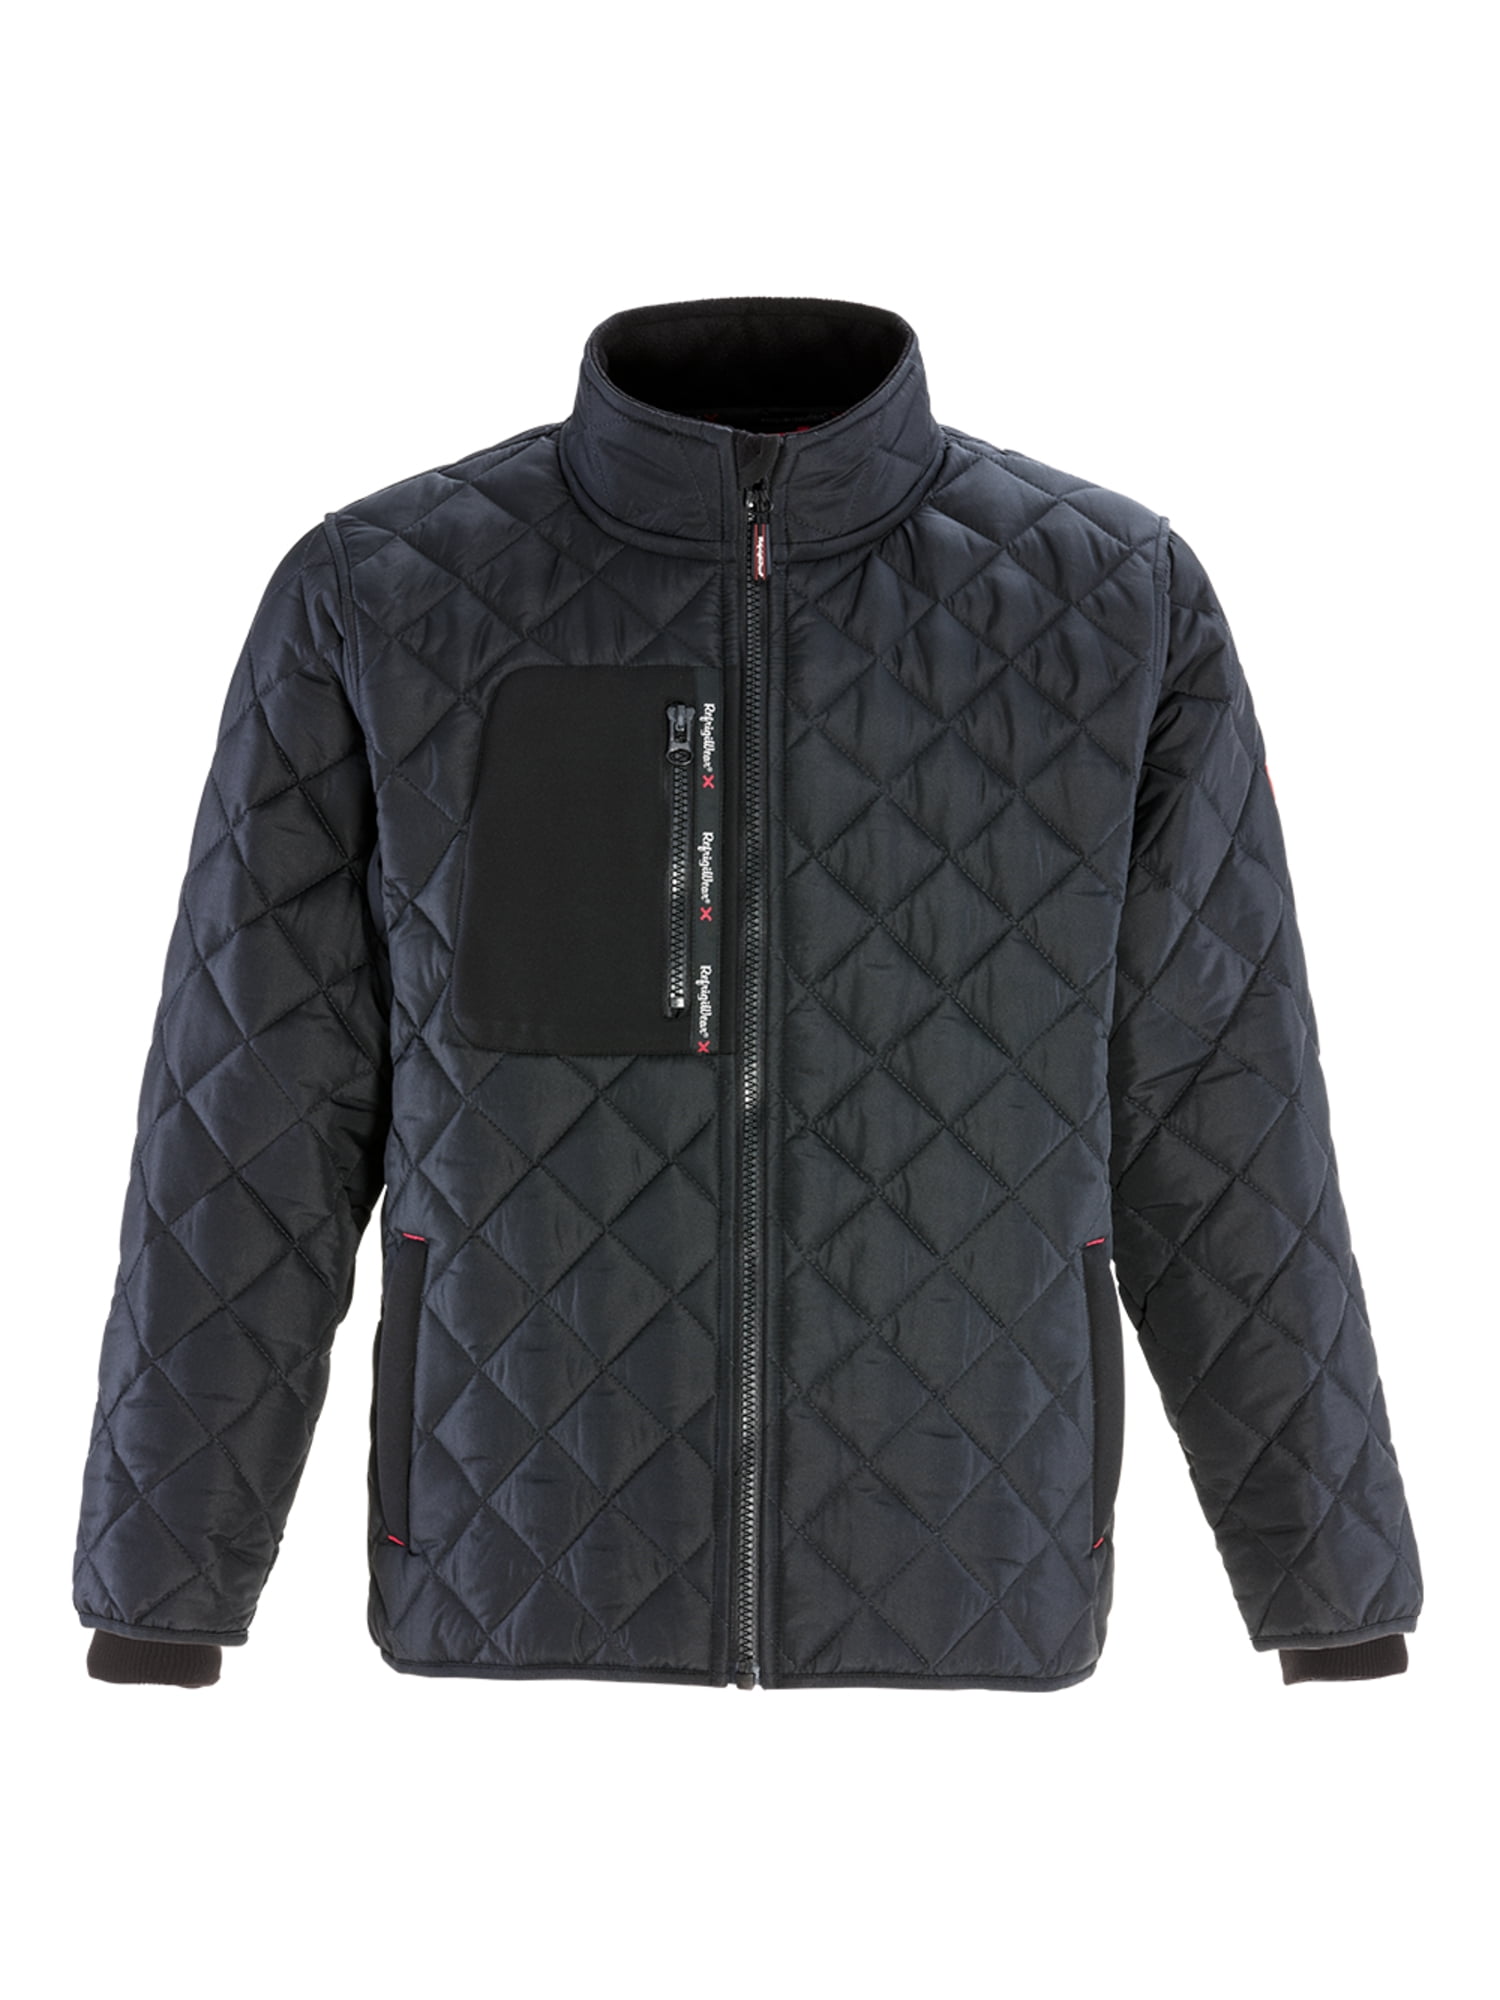 RefrigiWear Mens Water-Resistant Insulated Winterseal Coat with Soft Fleece Collar 